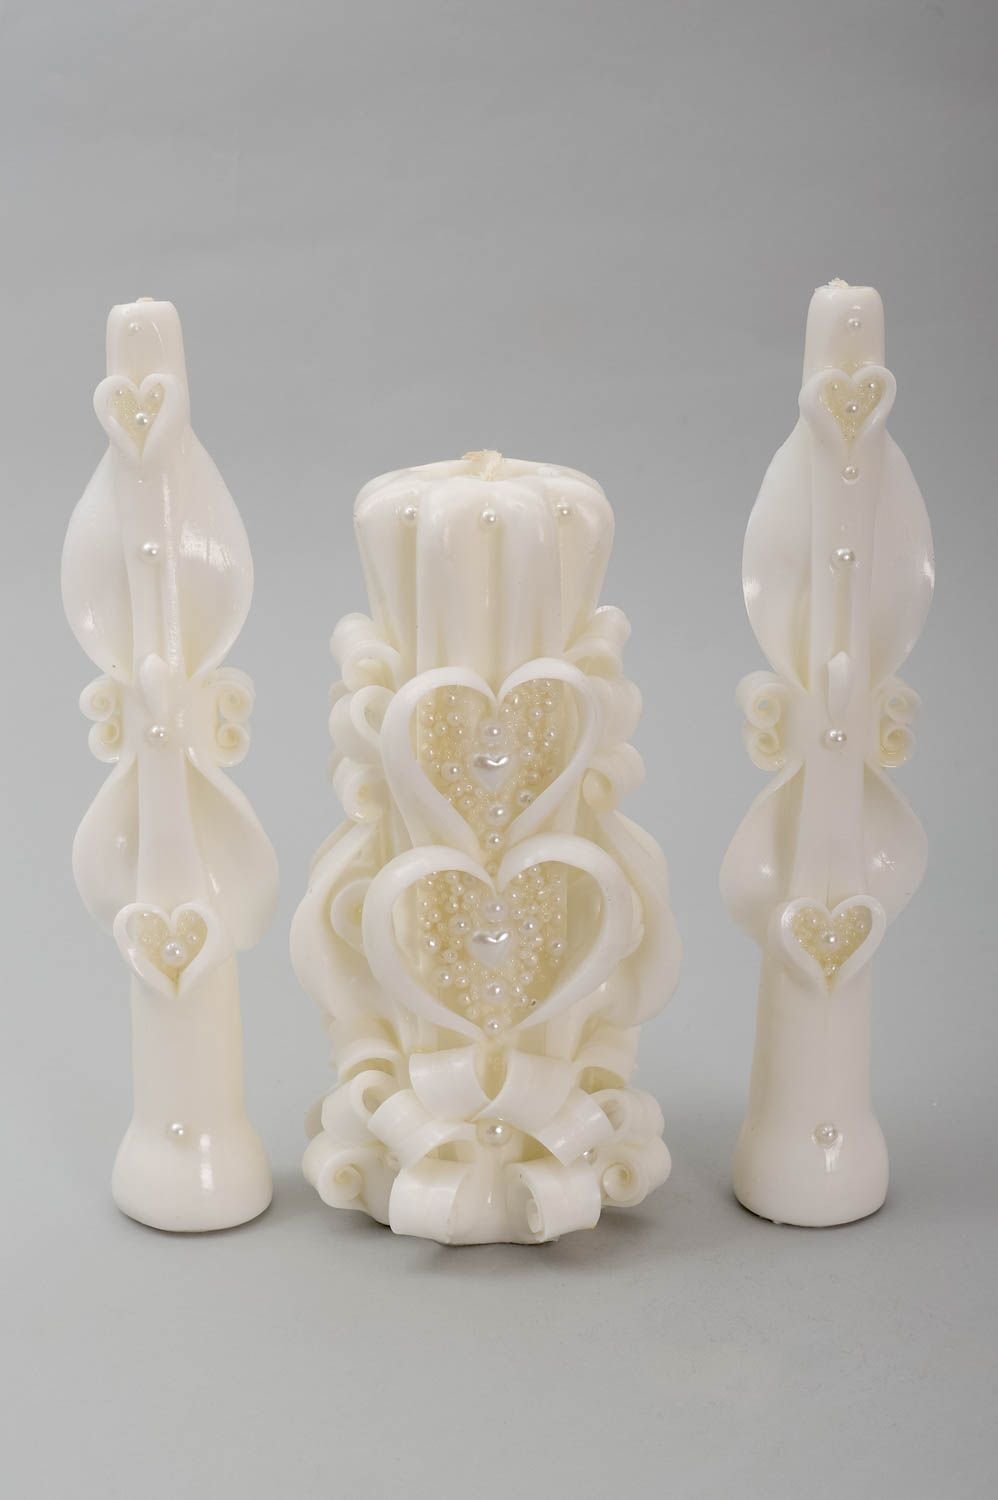 Beautiful homemade wedding candles 3 decorative candles interior decorating photo 5